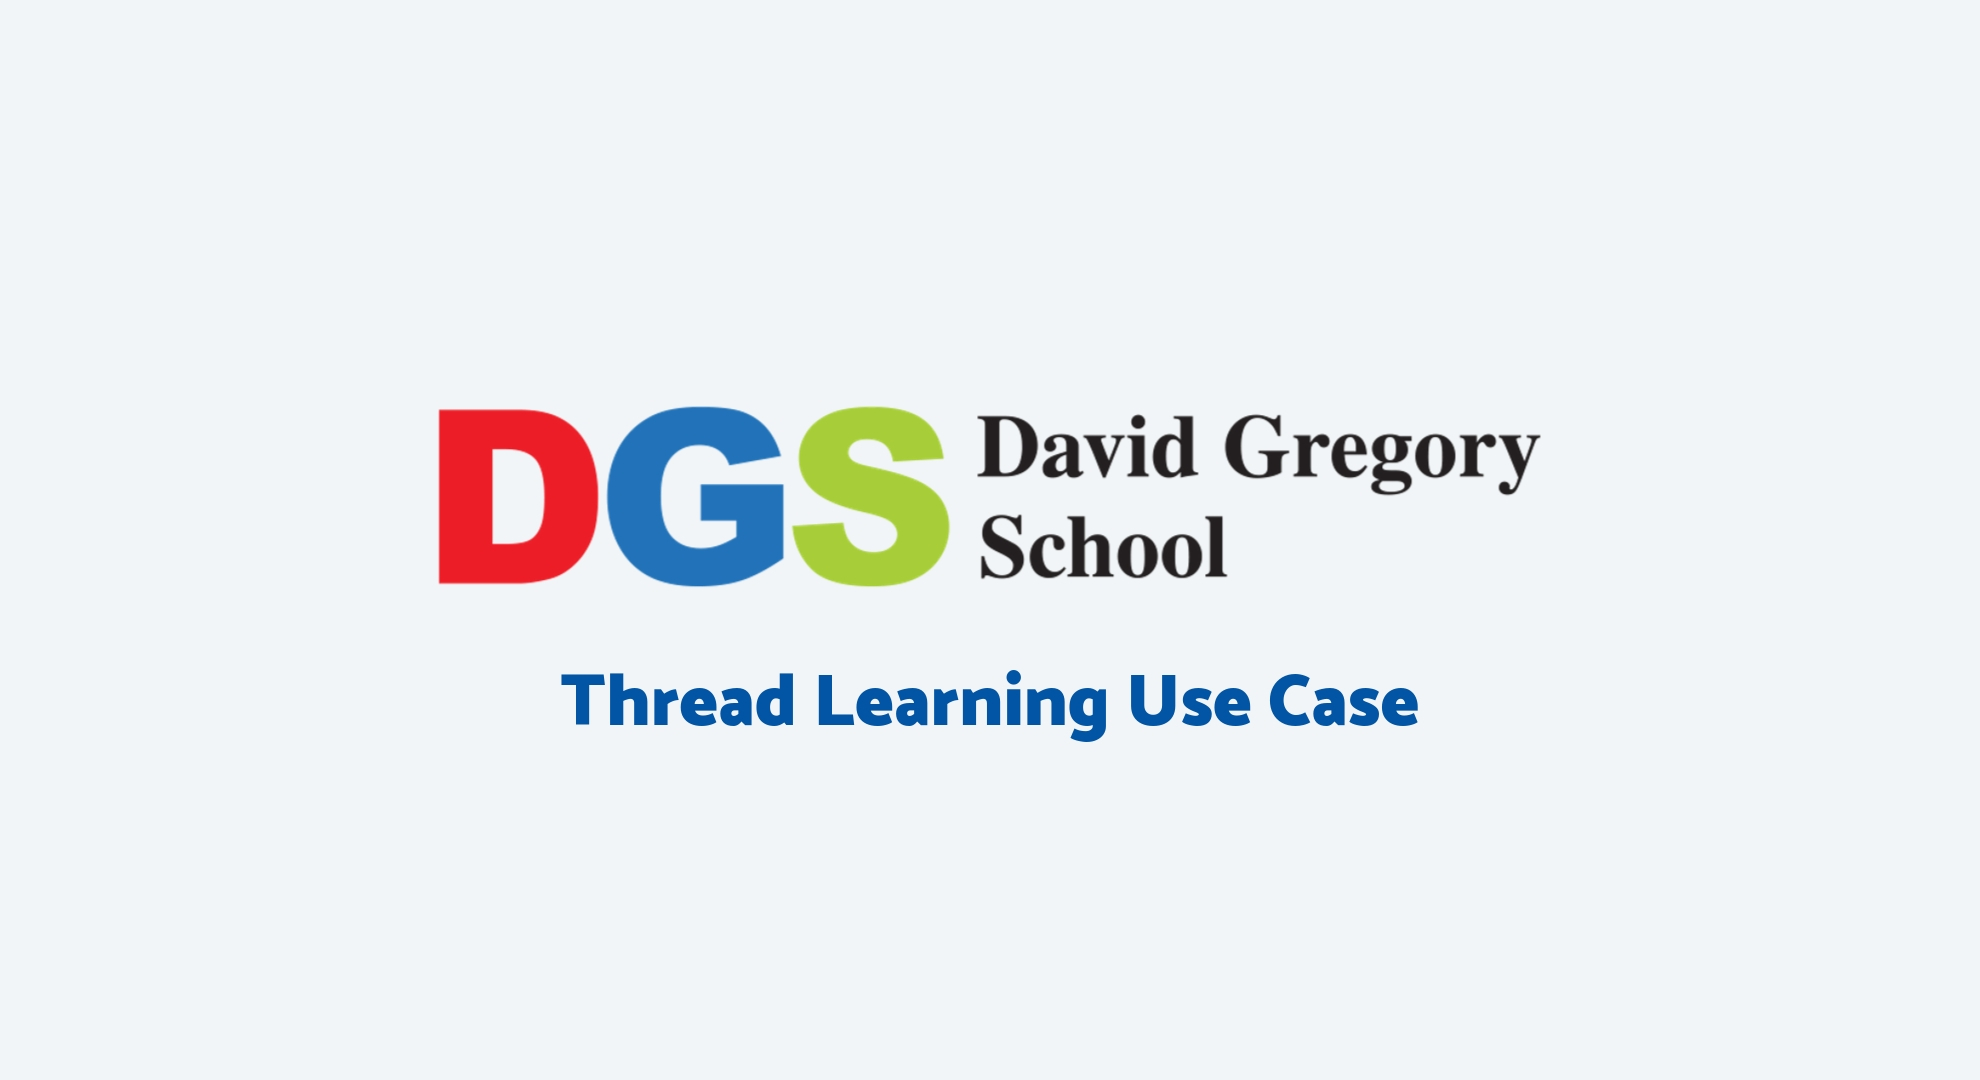 Thread Learning Use Case: David Gregory School